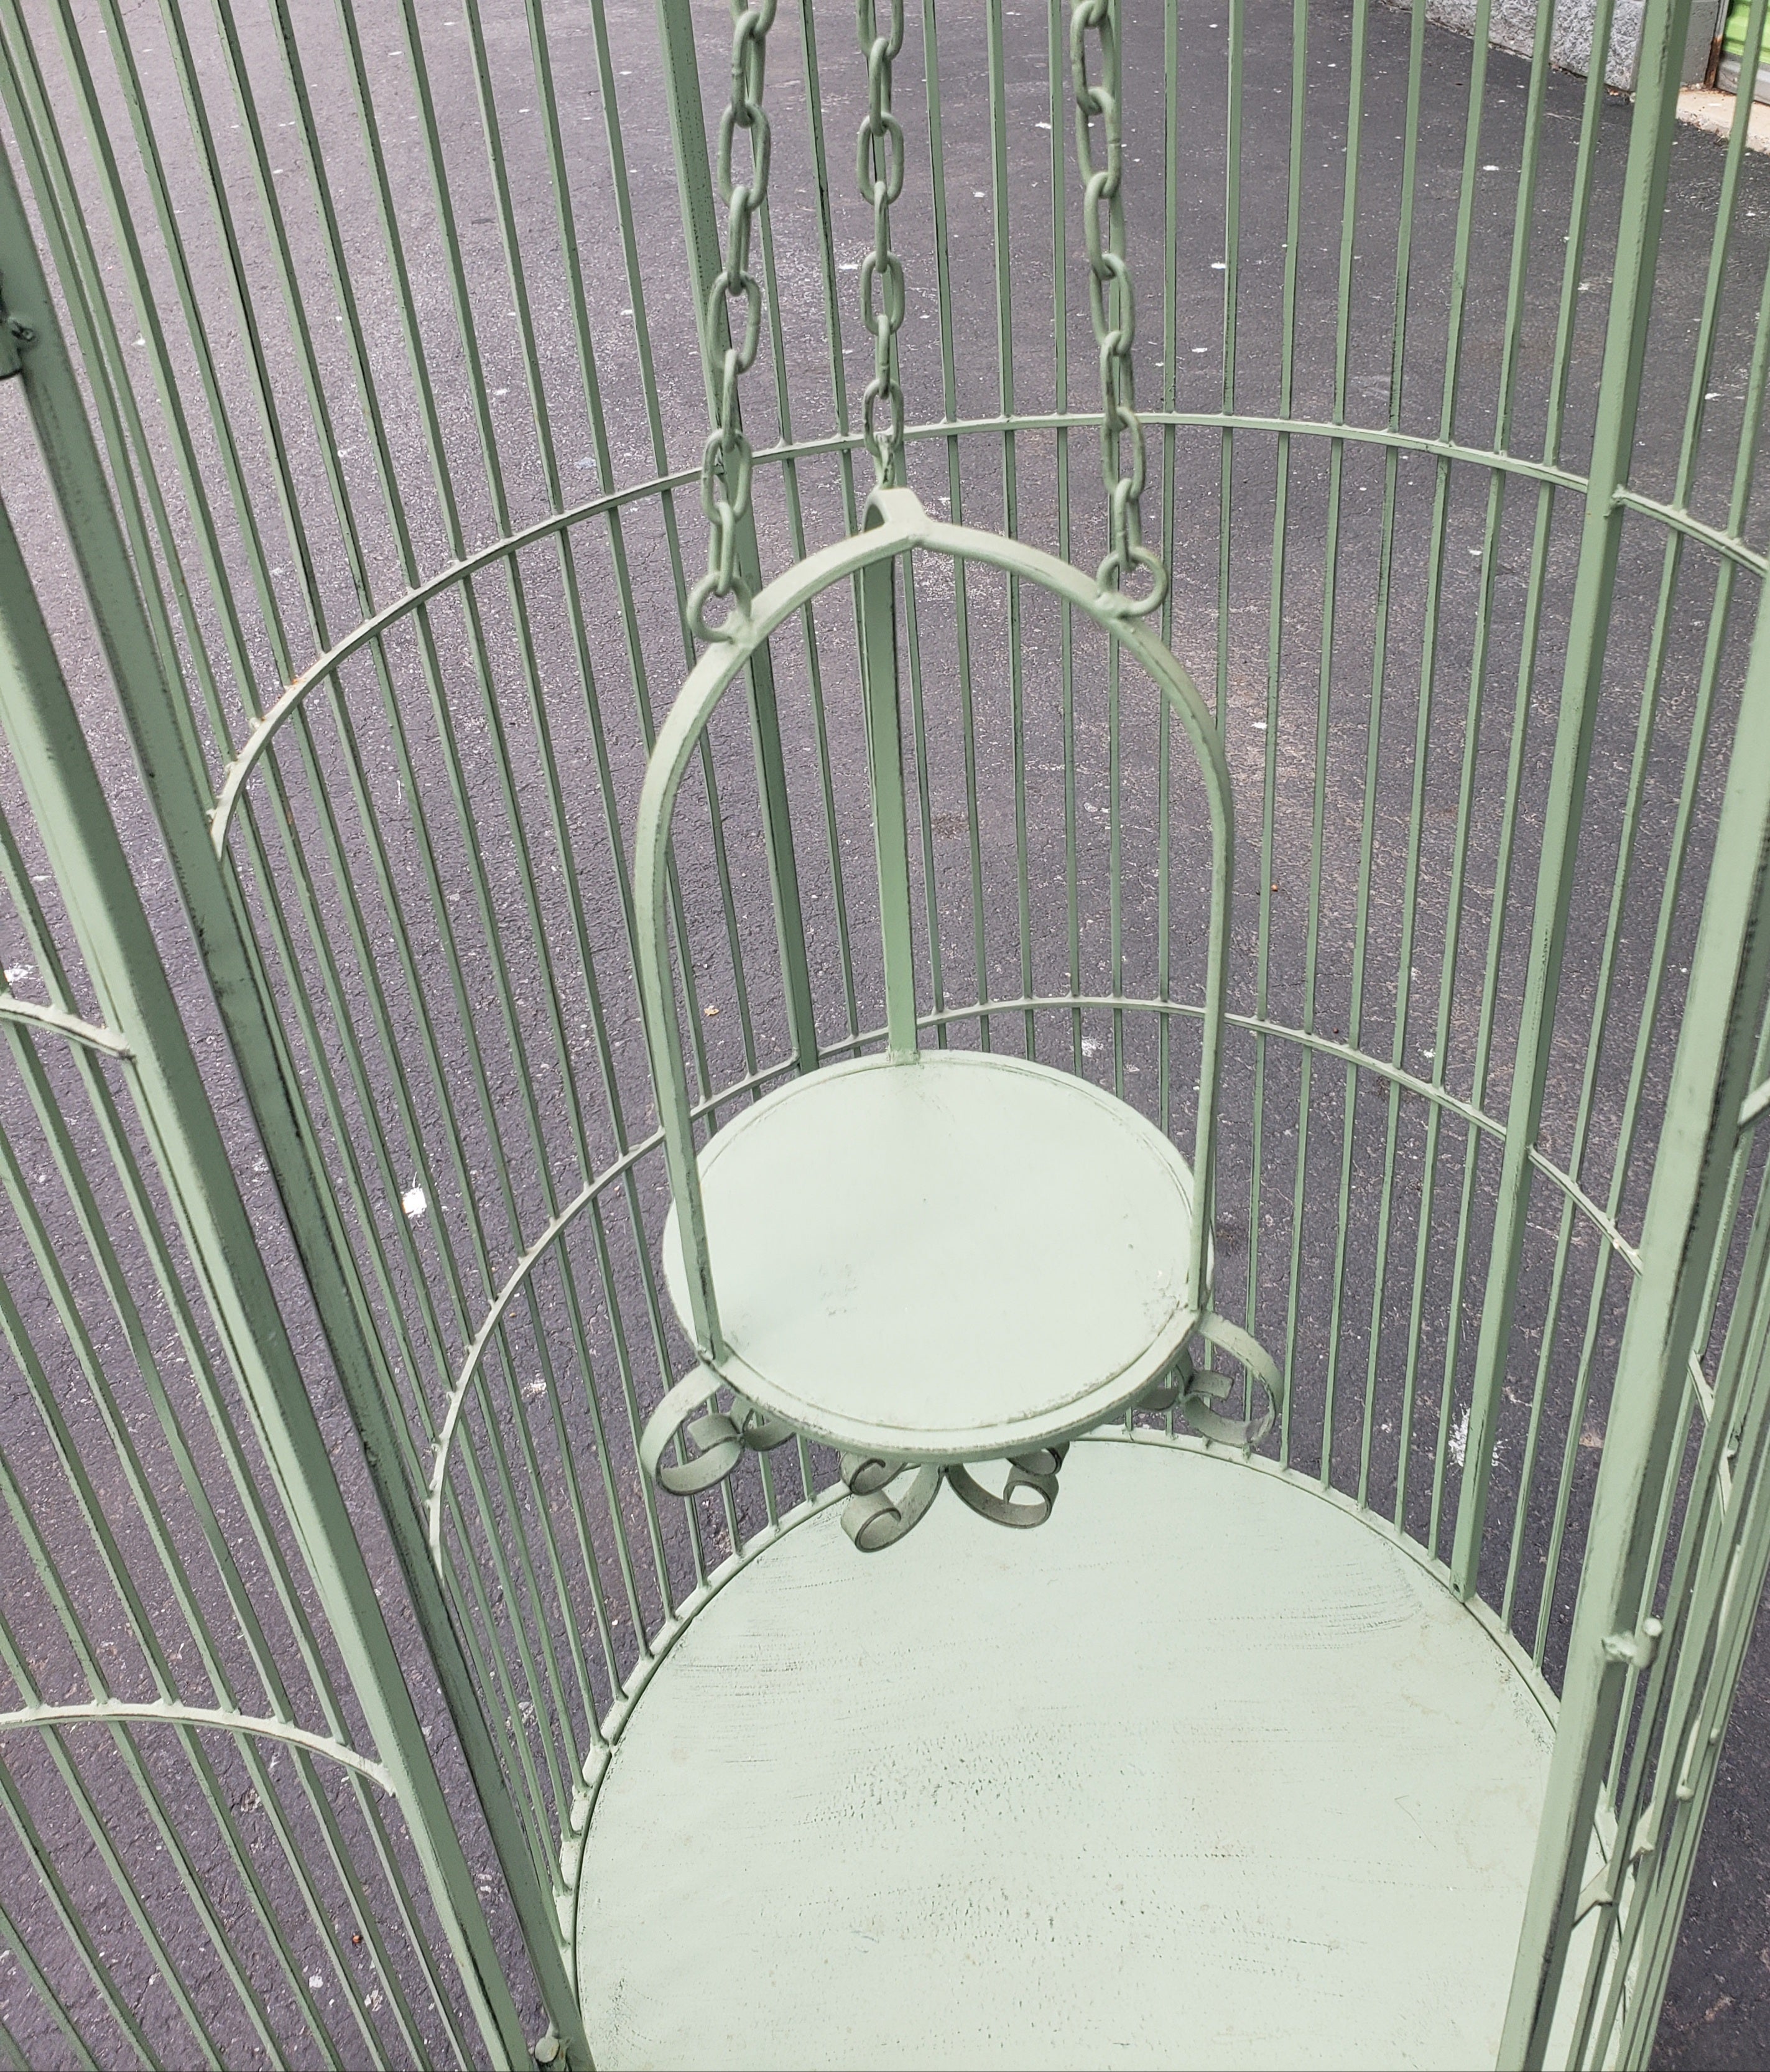 teal bird cage